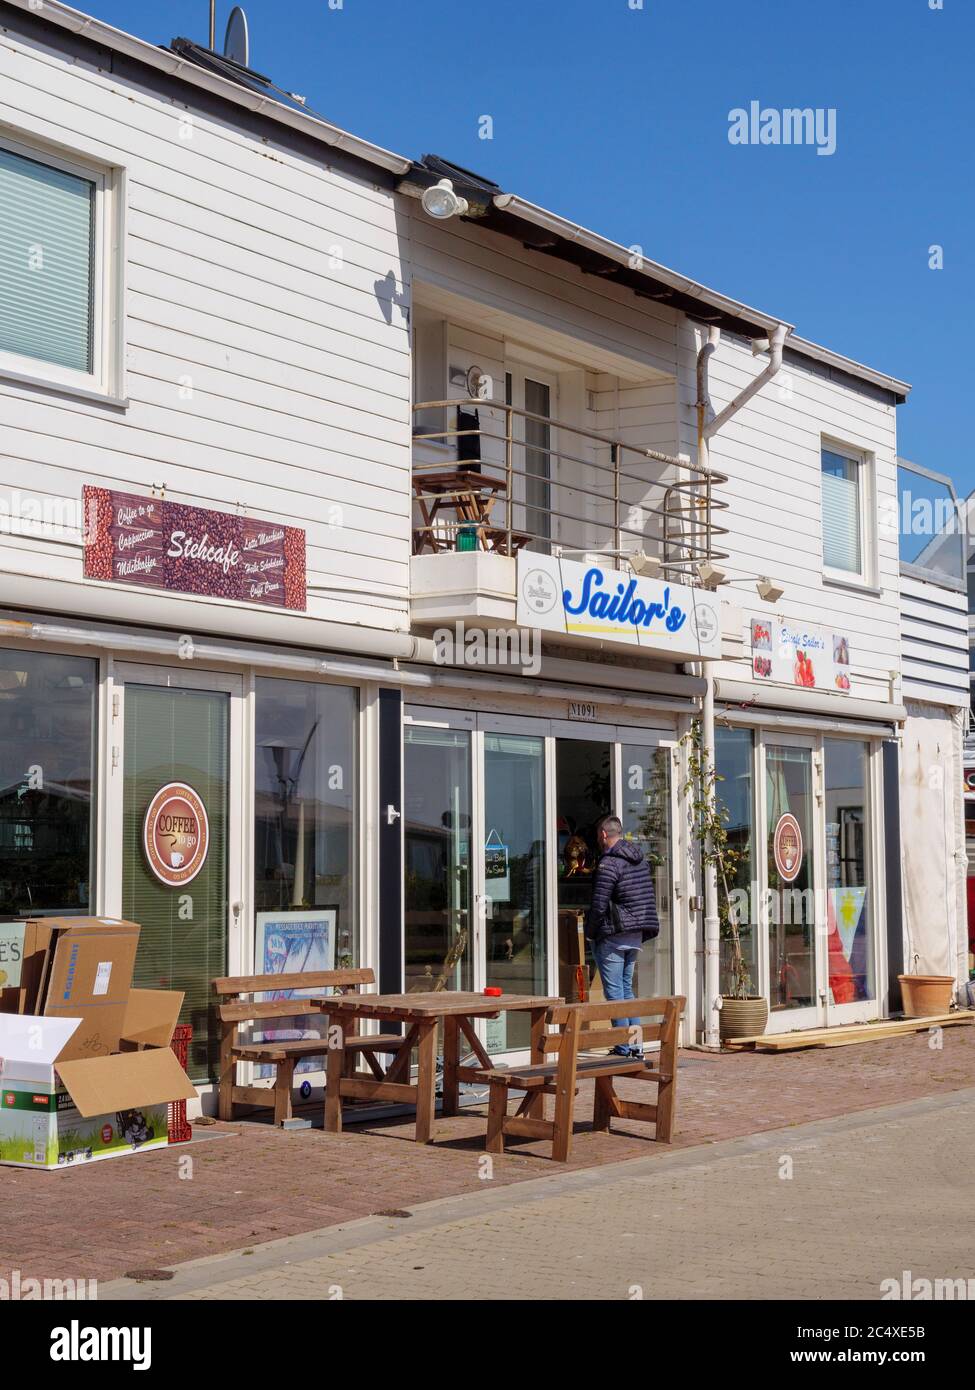 Coffeeshop Stehcafé und Sailor's at south port, Helgoland island, district Pinneberg, Schleswig-Holstein, Germany, Europe Stock Photo